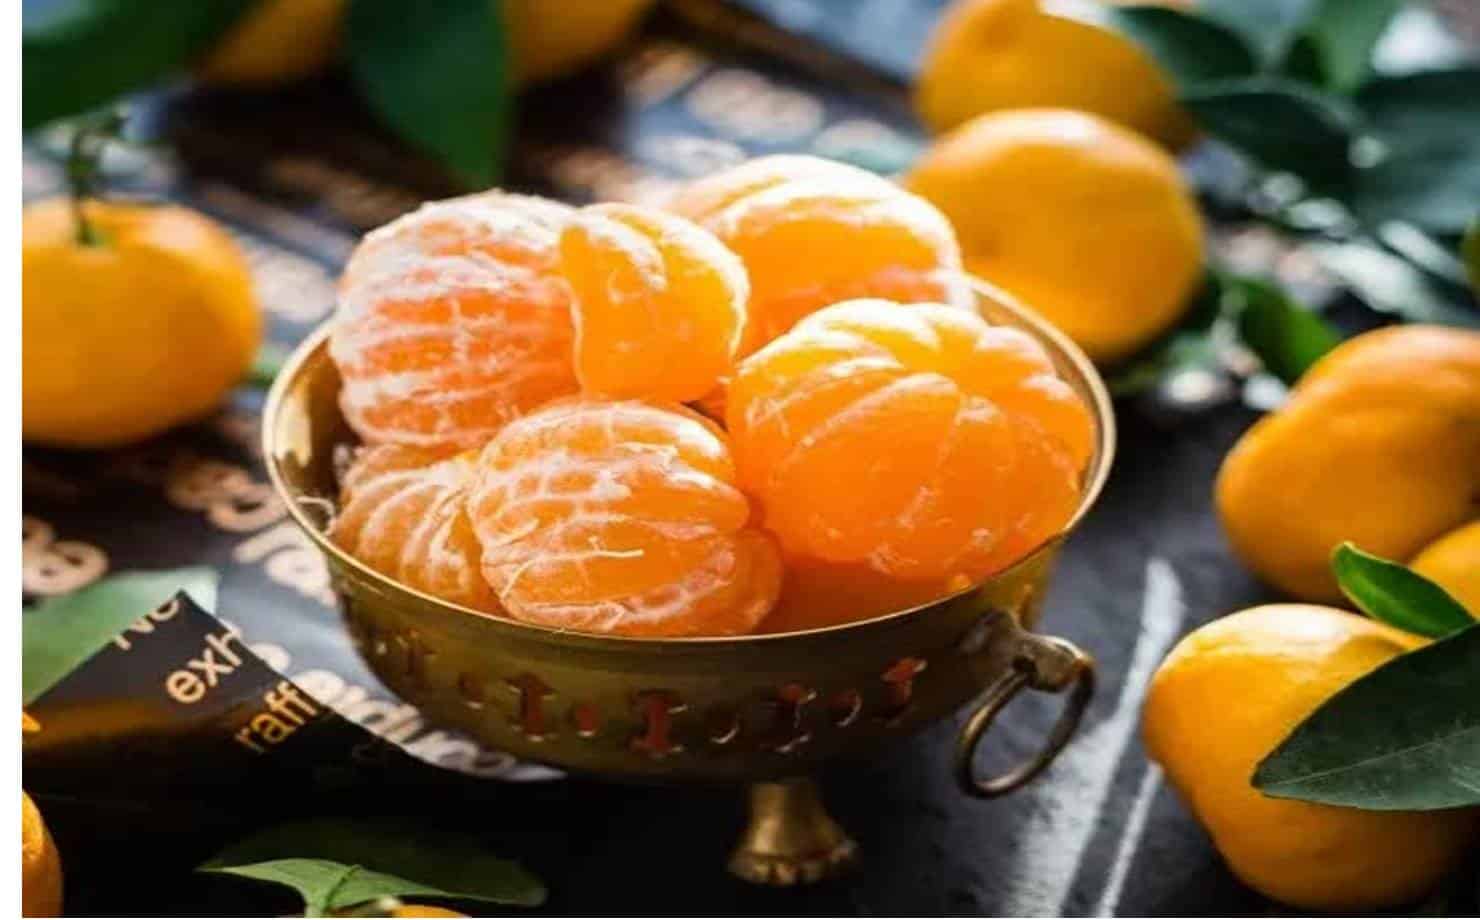 Casca de tangerina para rejuvenescer, remover manchas e rugas